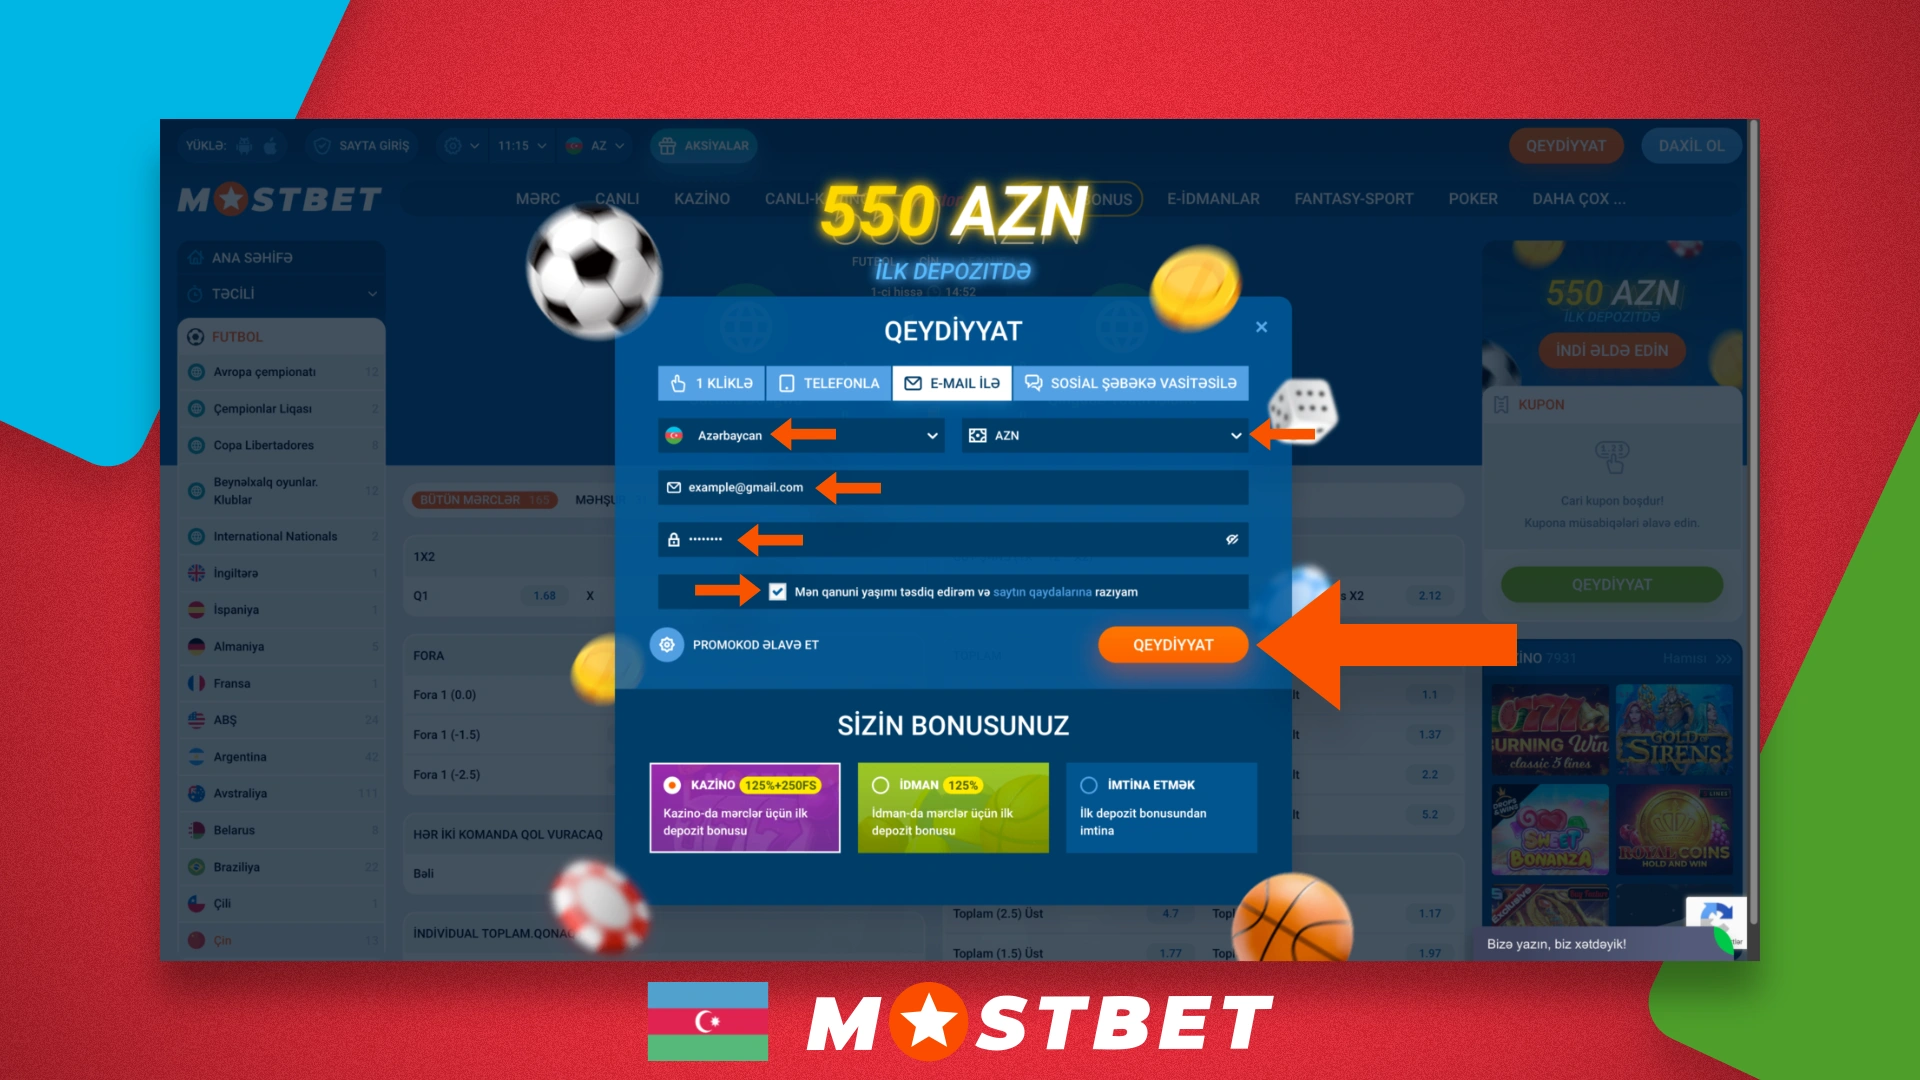 New customer registration form on Mostbet Azerbaijan website